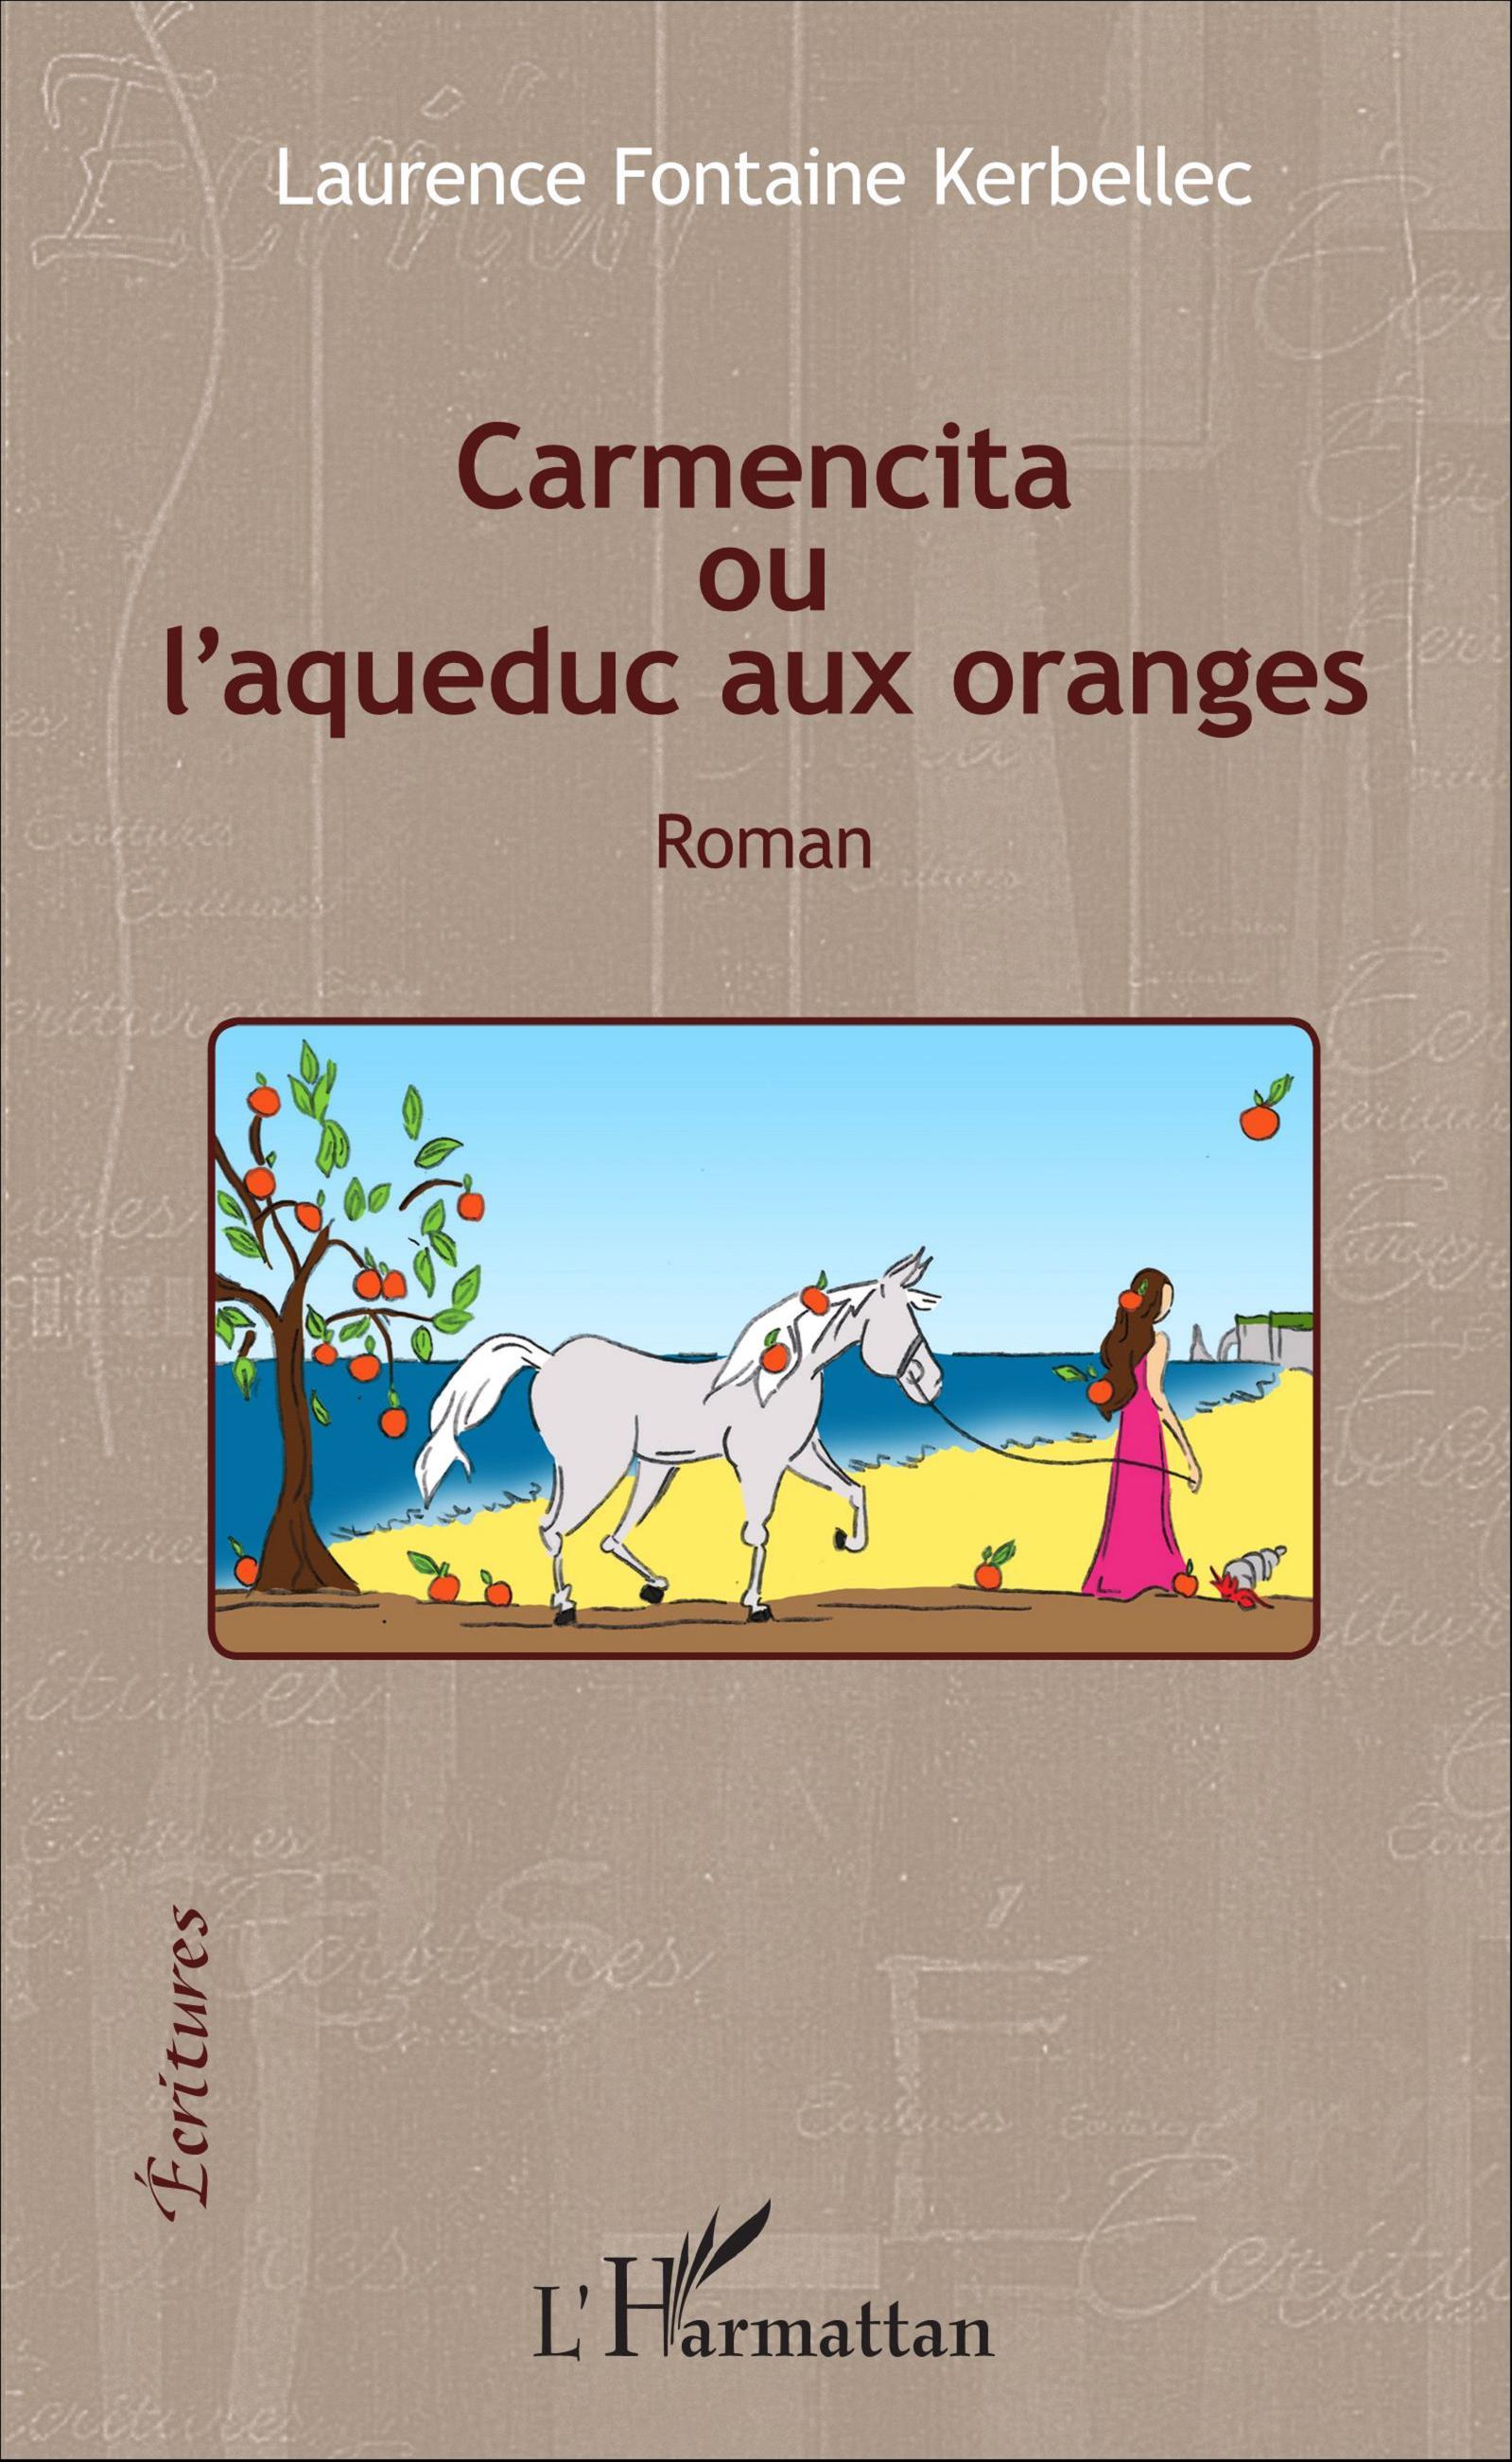 Carmencita ou l'aqueduc aux oranges, Roman (9782343085500-front-cover)